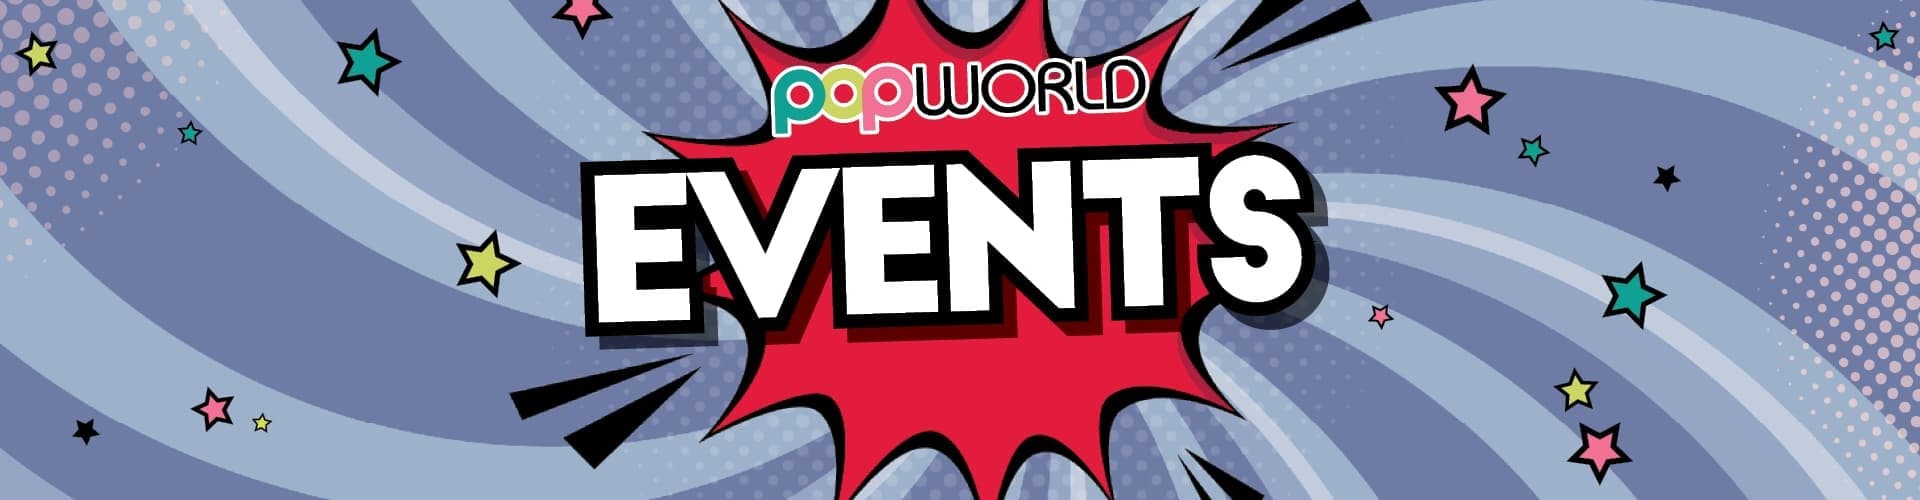 Events at Popworld Manchester